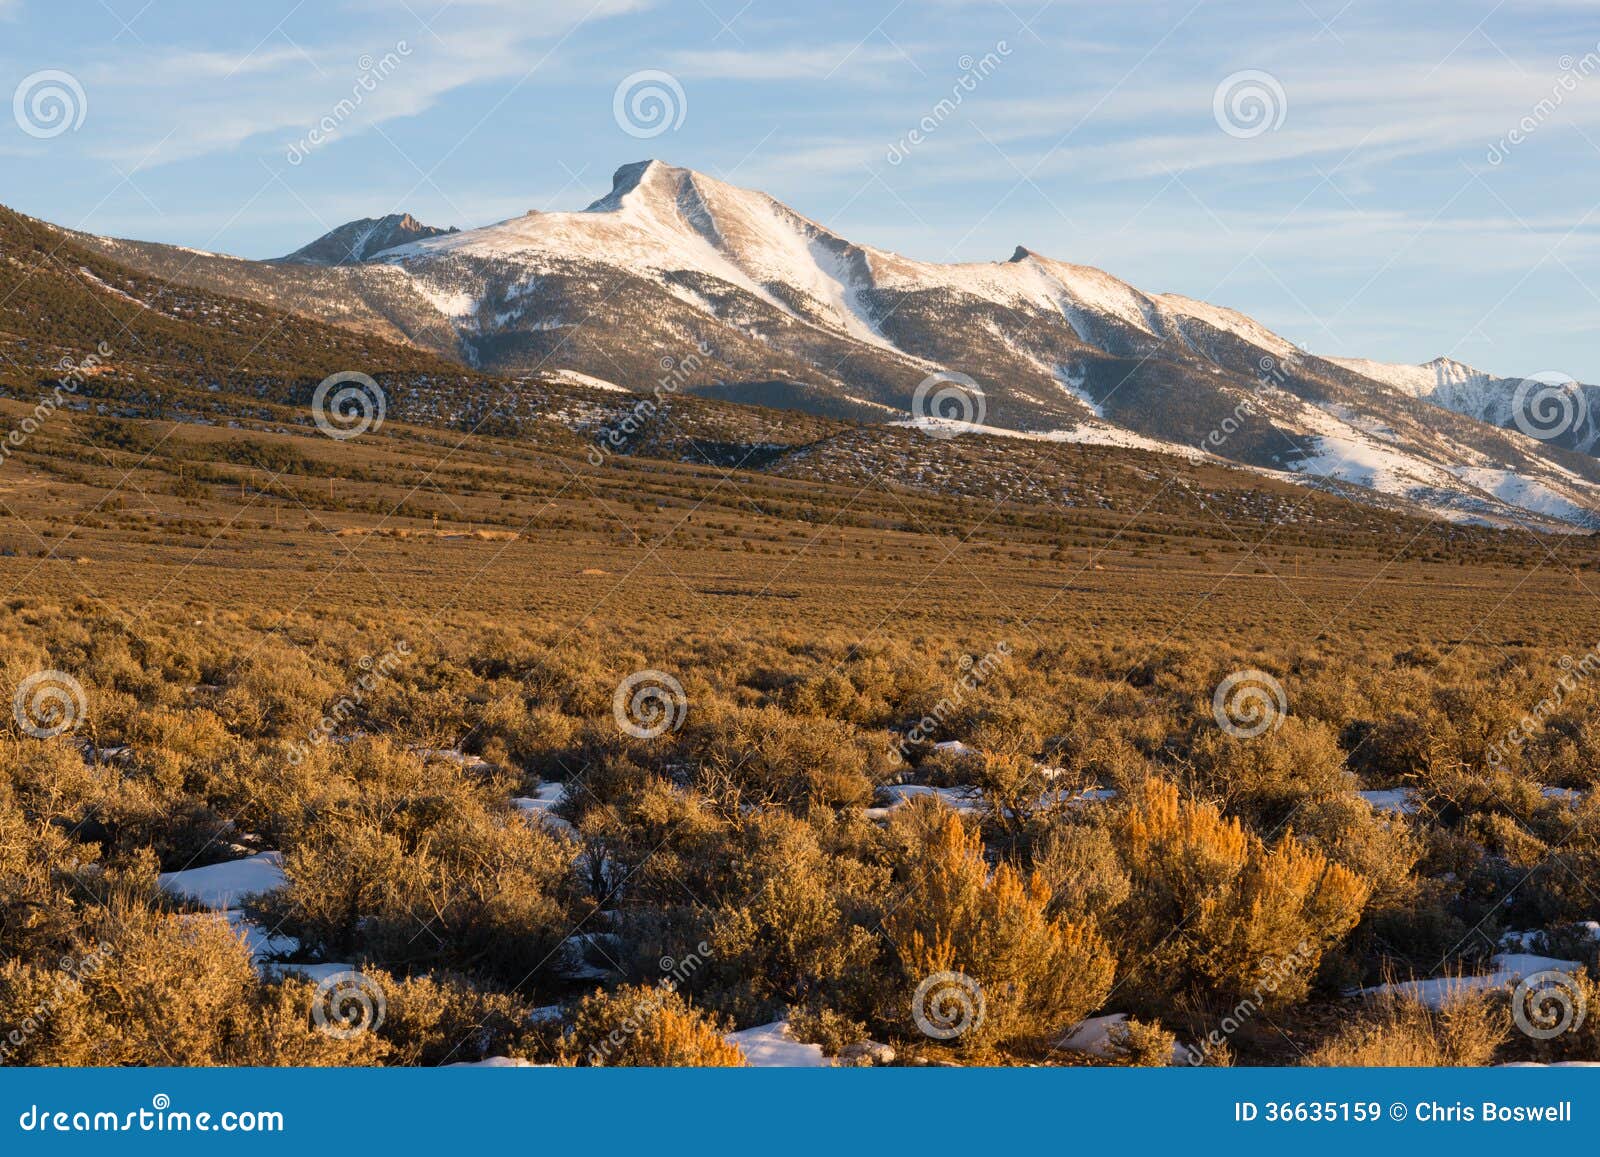 high mountain peak great basin region nevada landscape